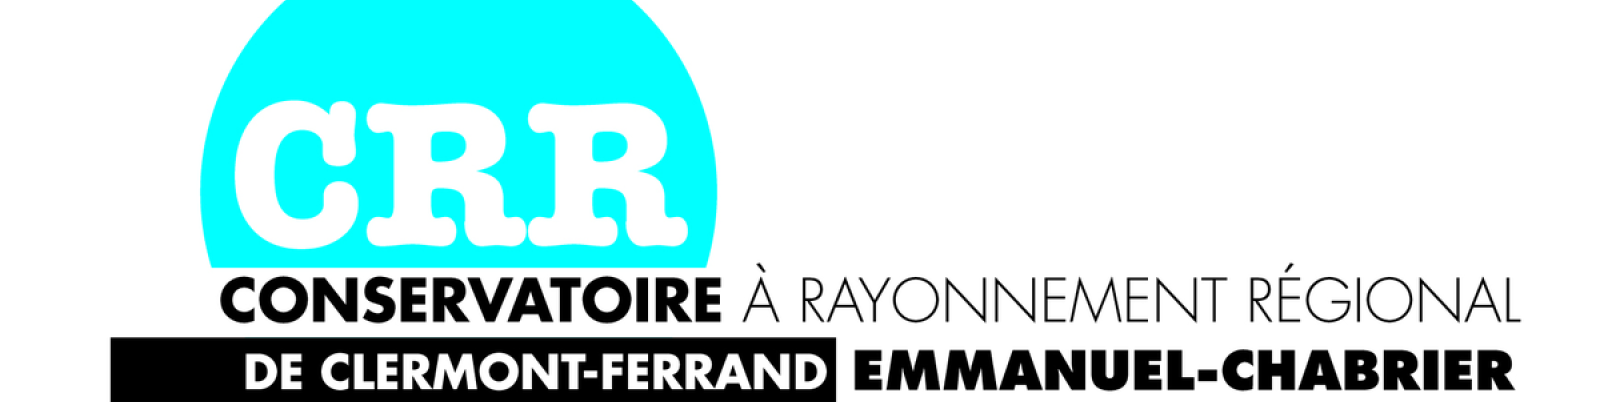 Logo CRR